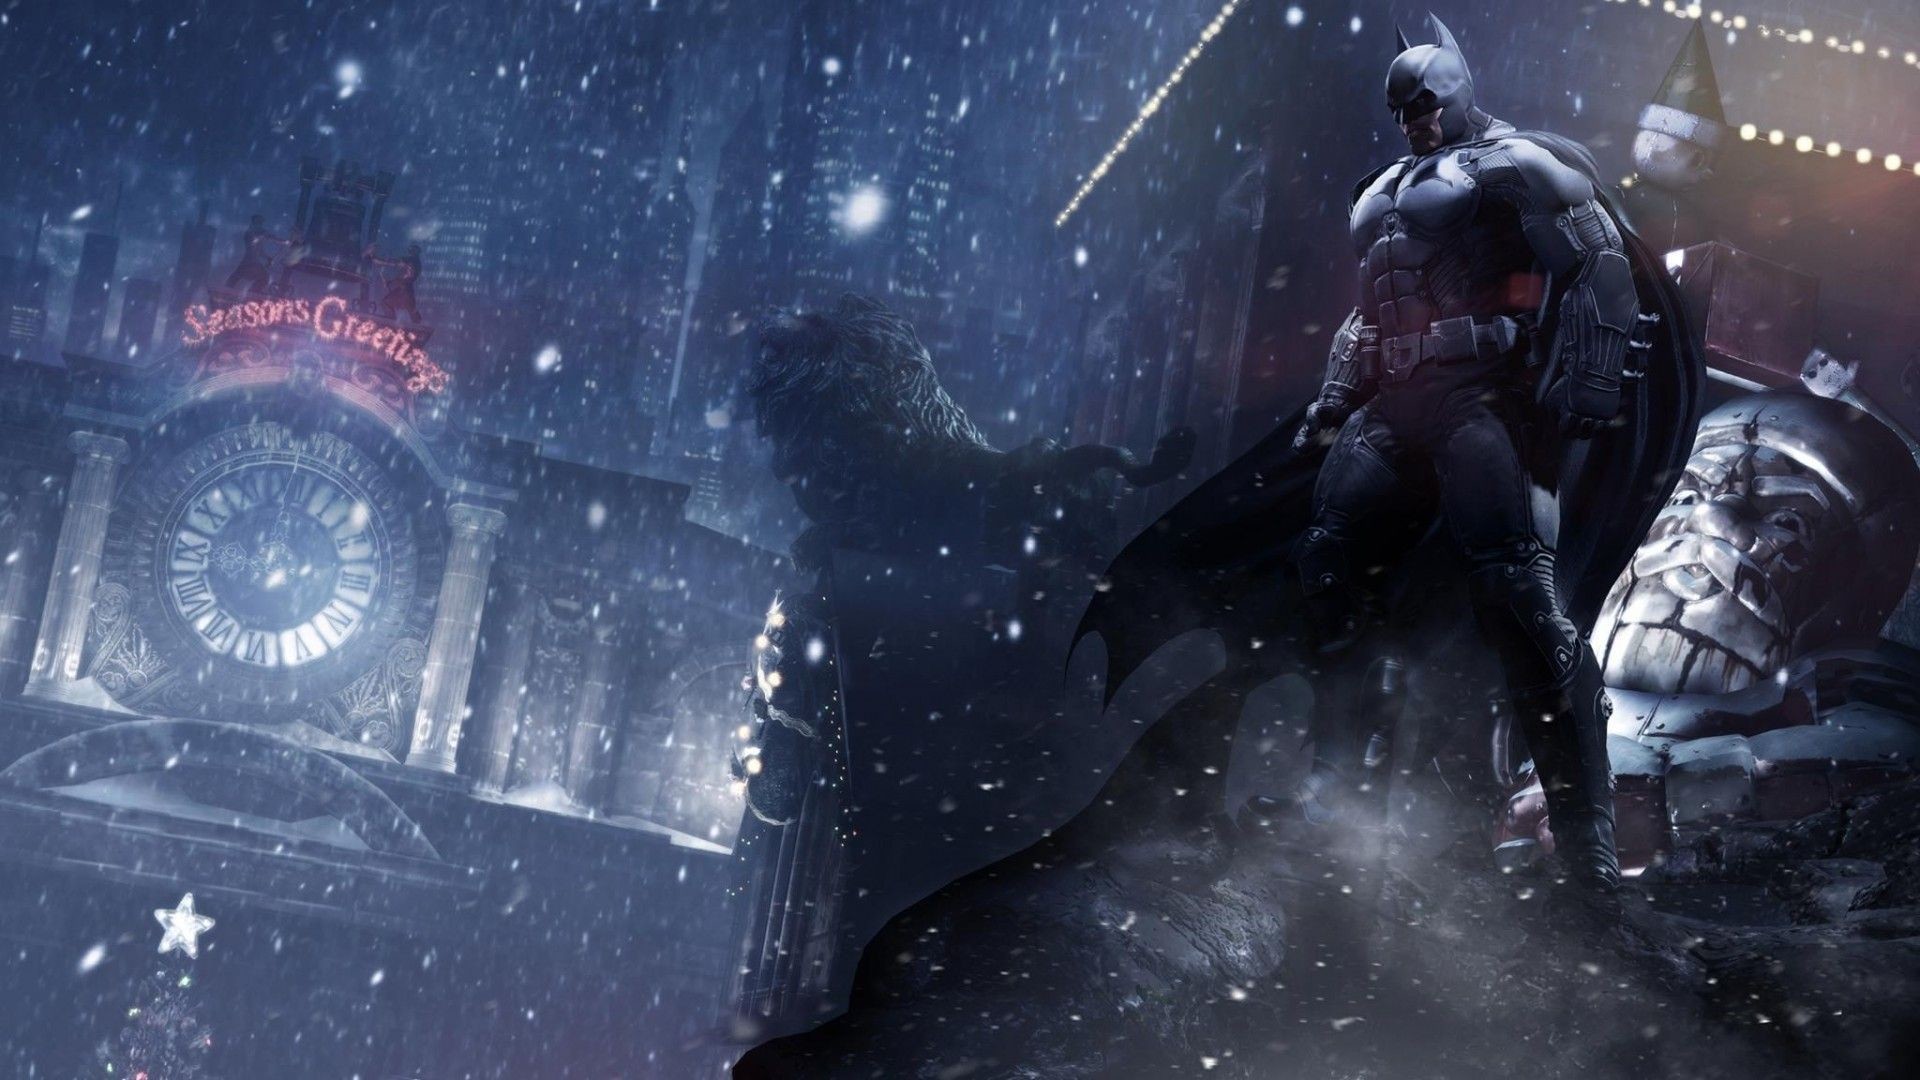 Batman - Arkham Knight Wallpaper (from comicwalls) : r/batman